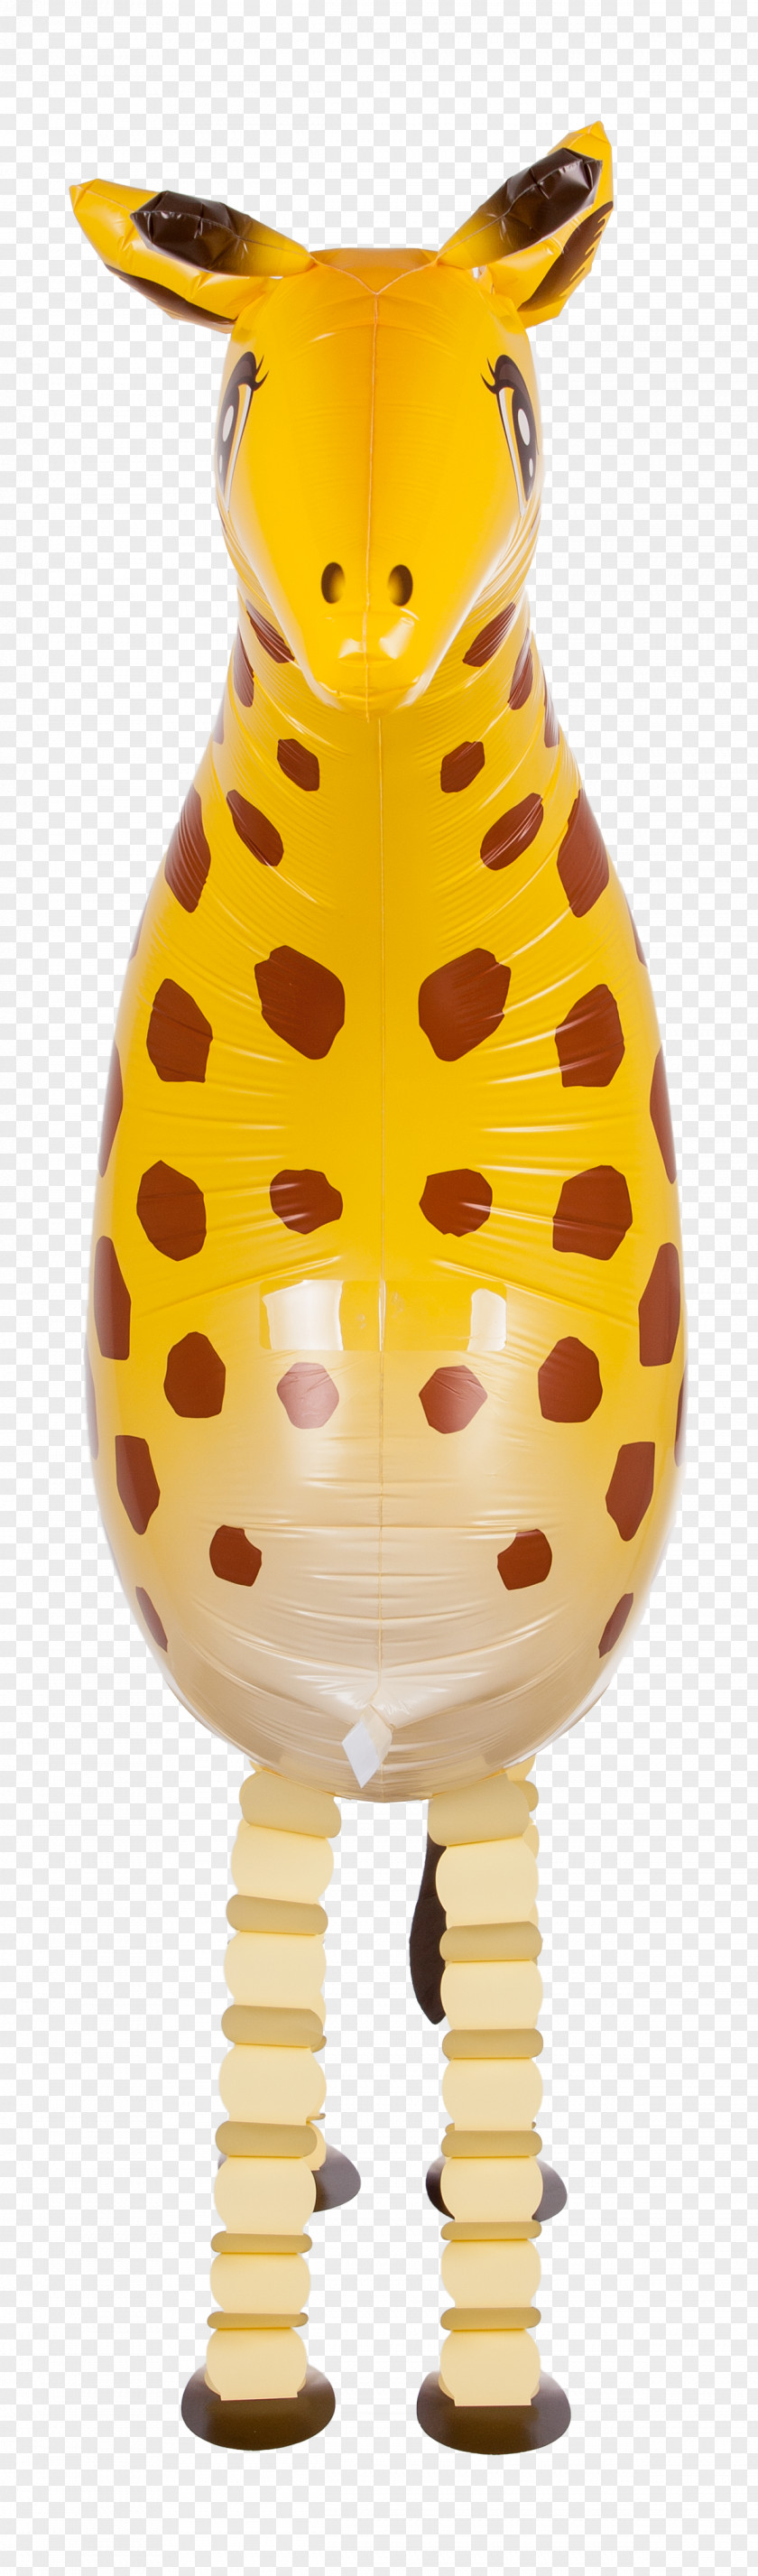 Giraffe Pattern PNG Image - PNGHERO